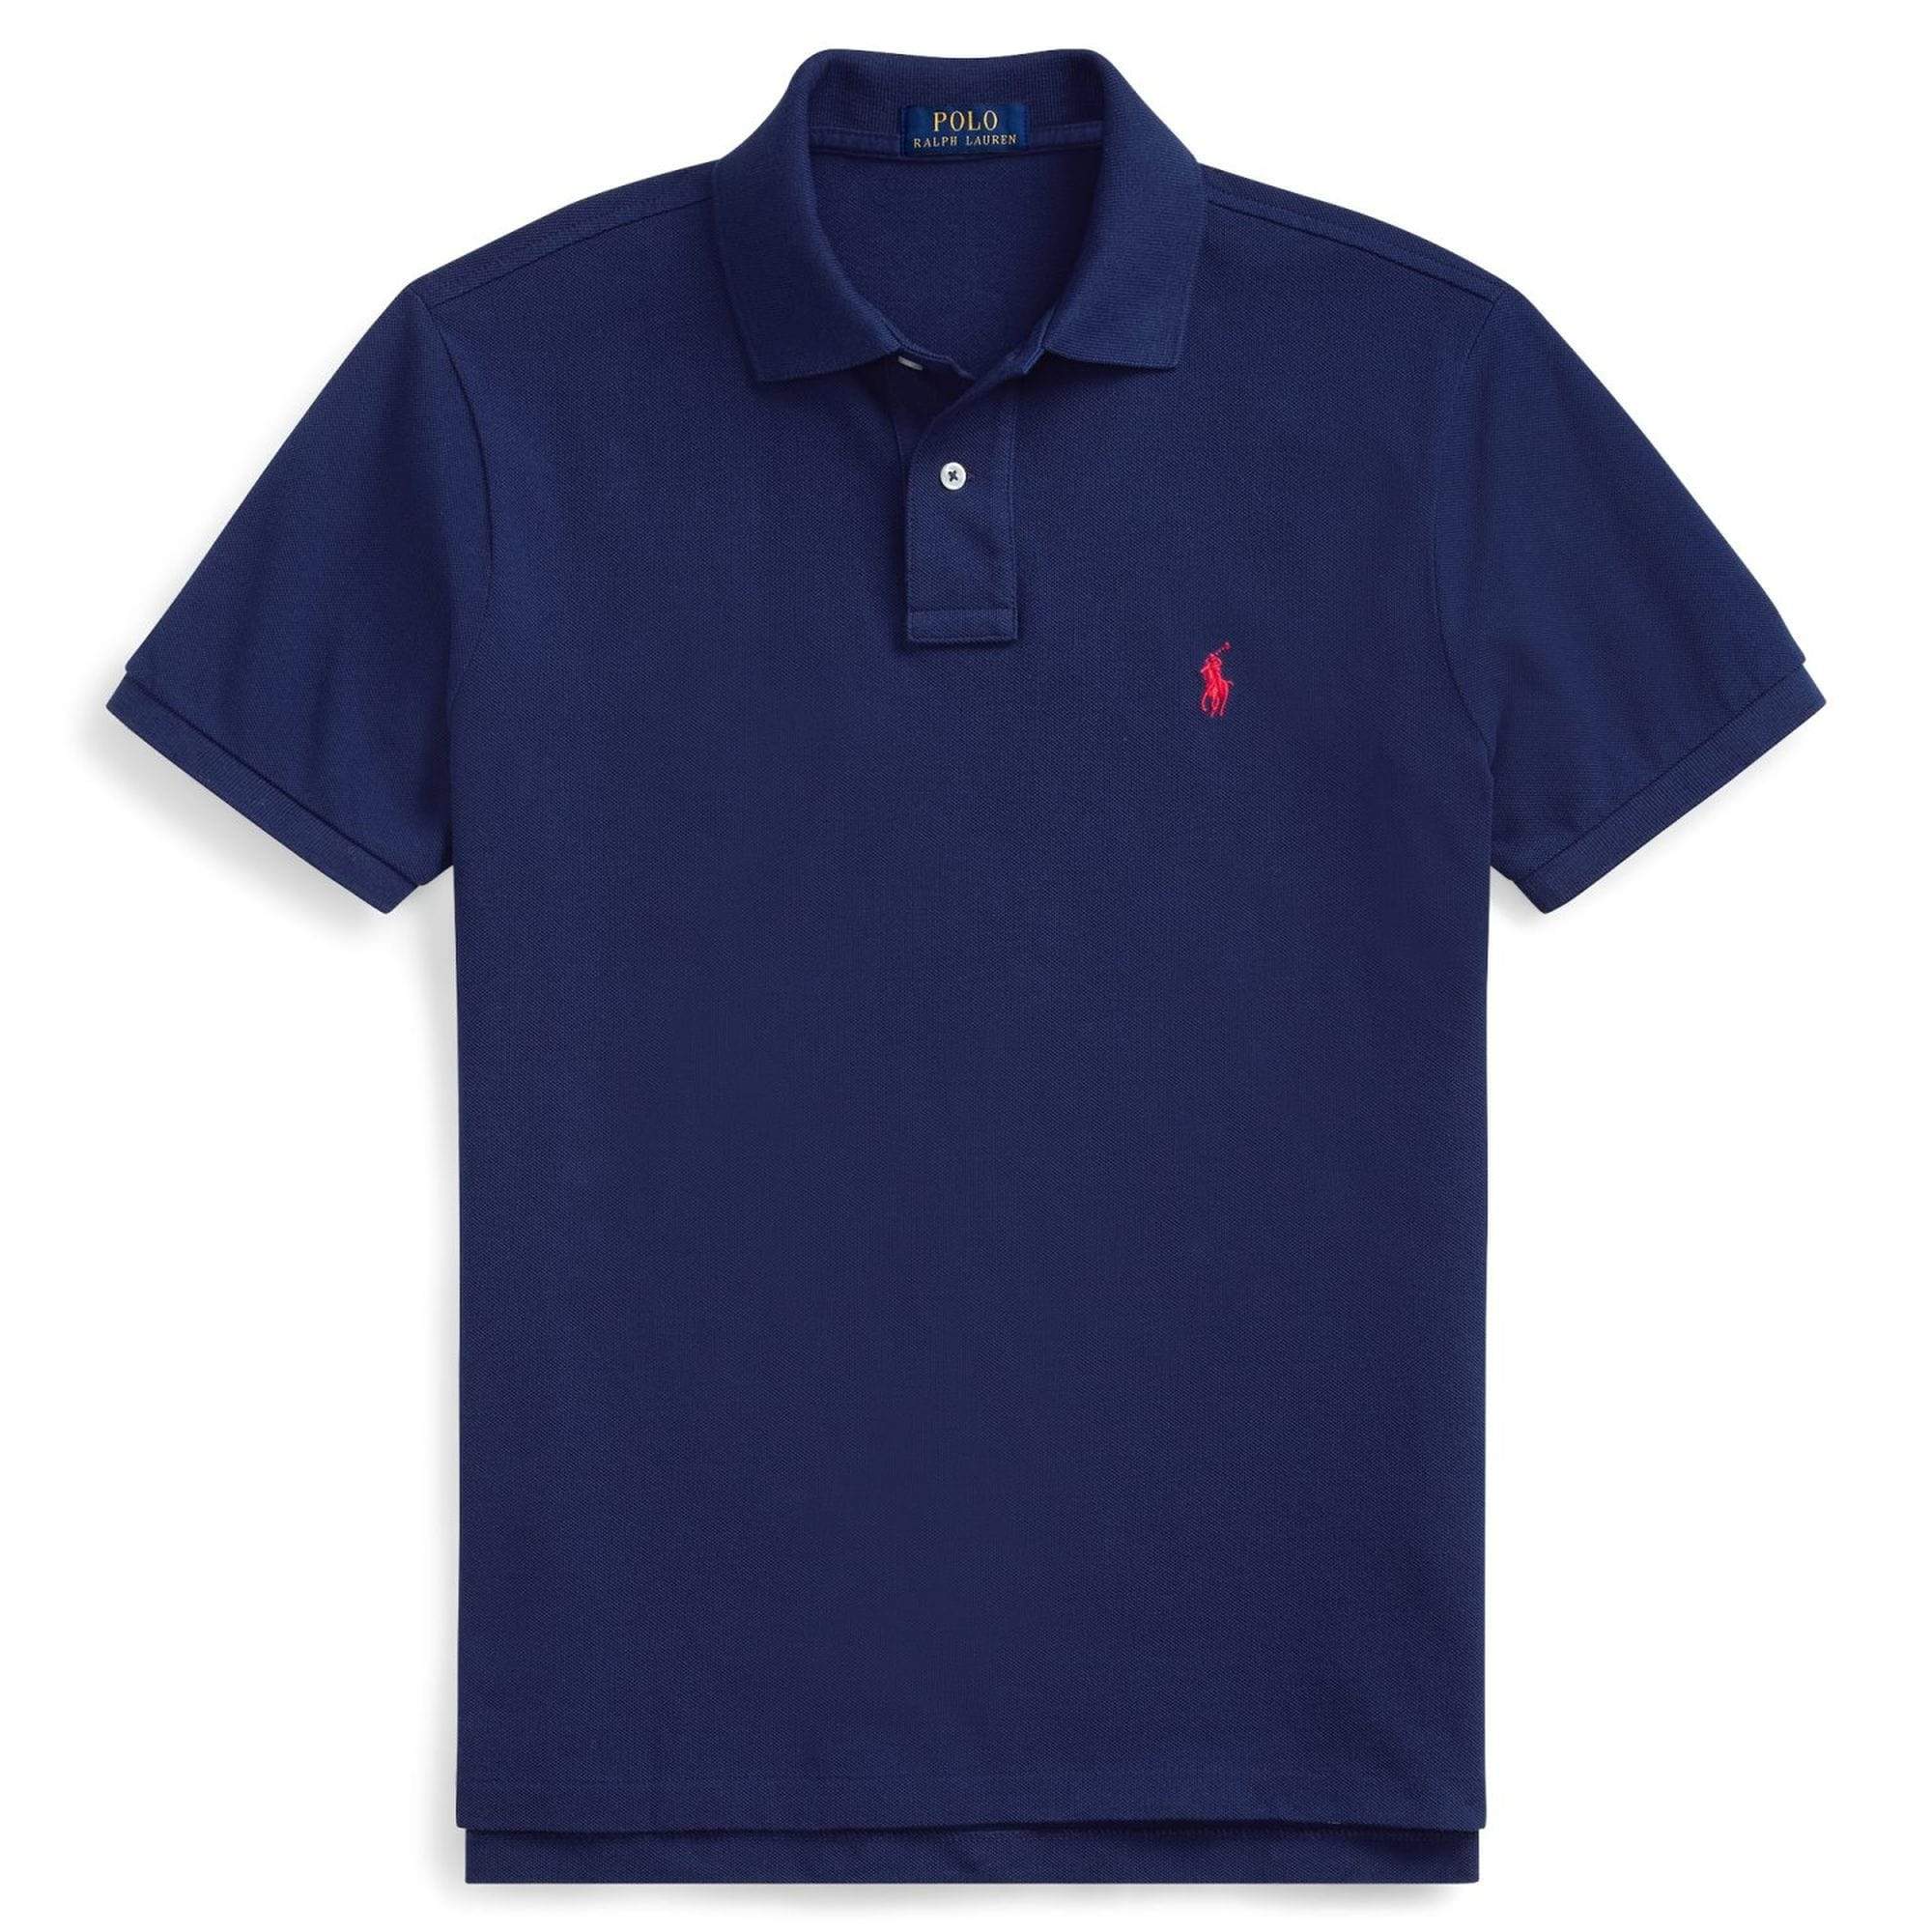 Polo Ralph Lauren - Polo Shirts - Polo Ralph Lauren Newport Navy Polo Shirt